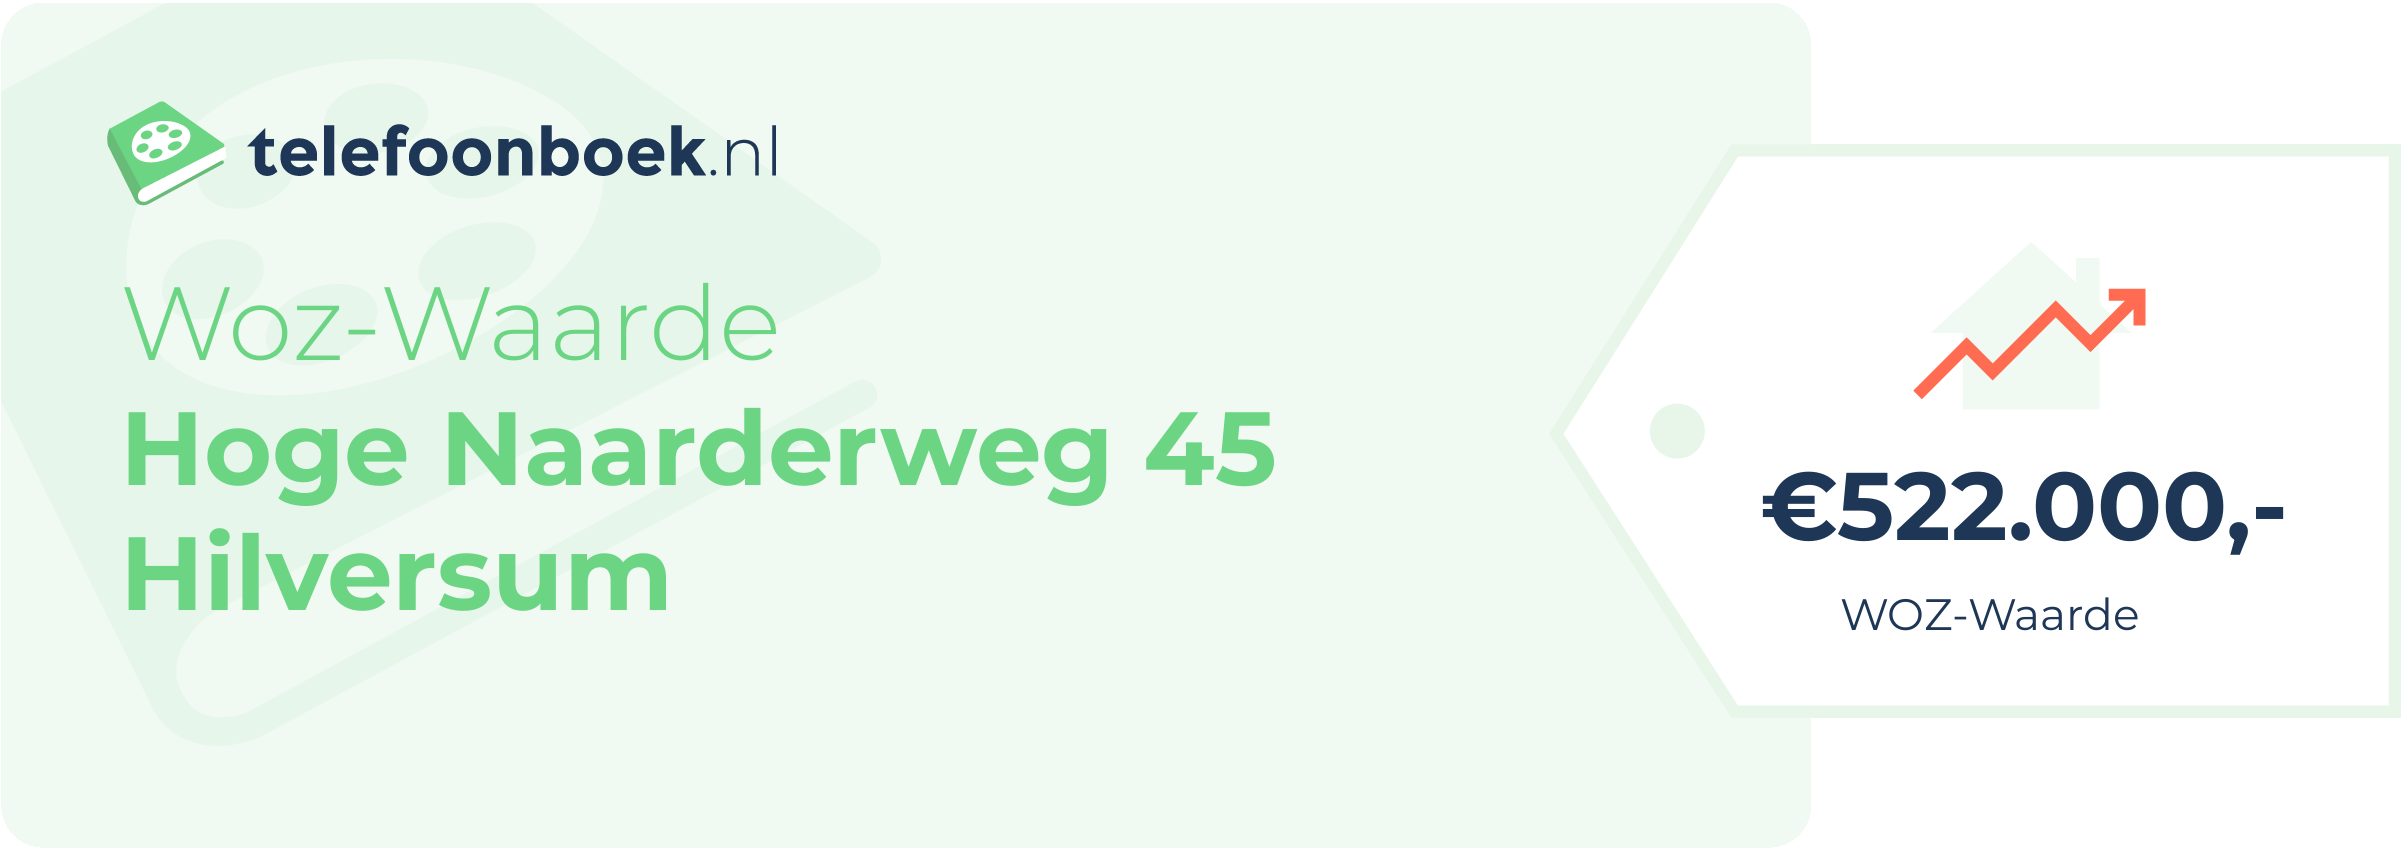 WOZ-waarde Hoge Naarderweg 45 Hilversum